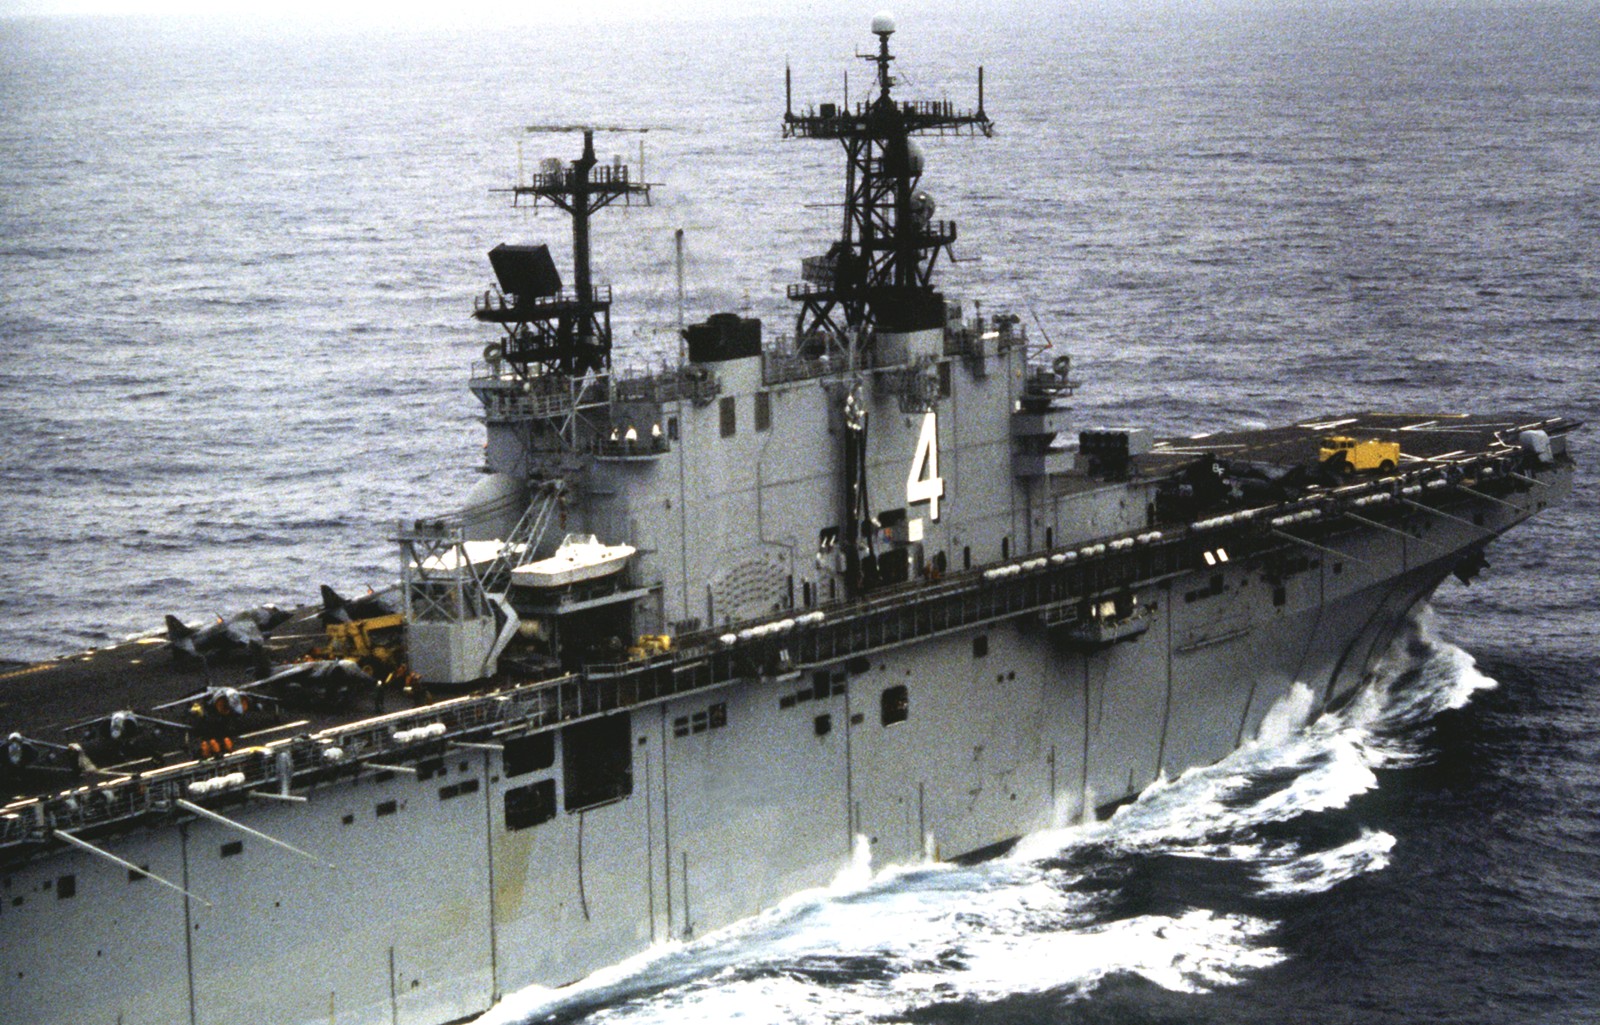 lha-4 uss nassau tarawa class amphibious assault ship us navy 78 hmm-263(c) composite embarked